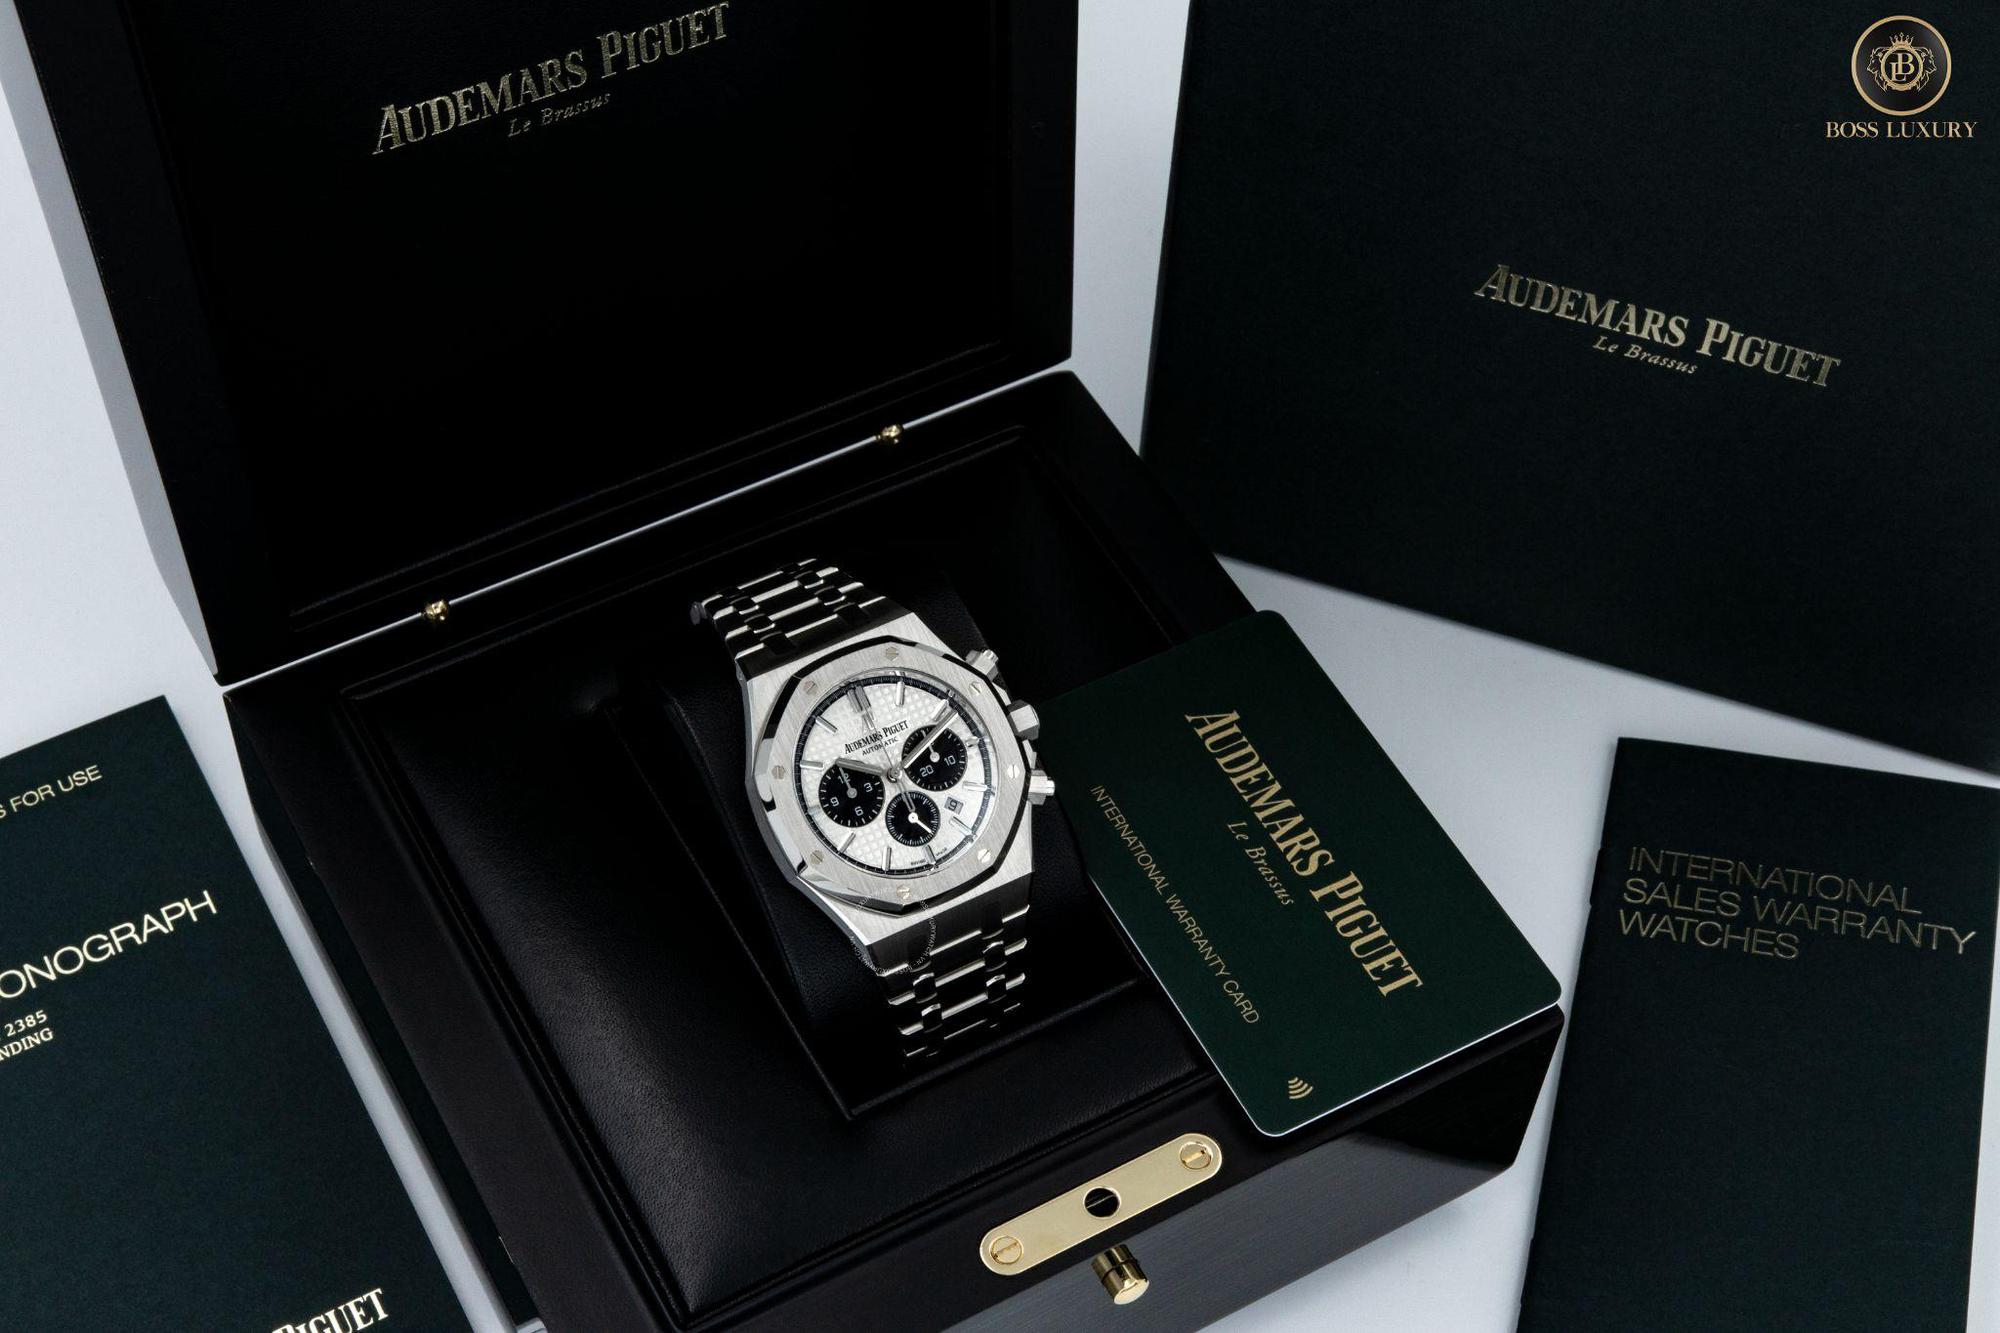 The Audemars Piguet Royal Oak watch models gentlemen must definitely add to the Boss Luxury collection - Photo 4.